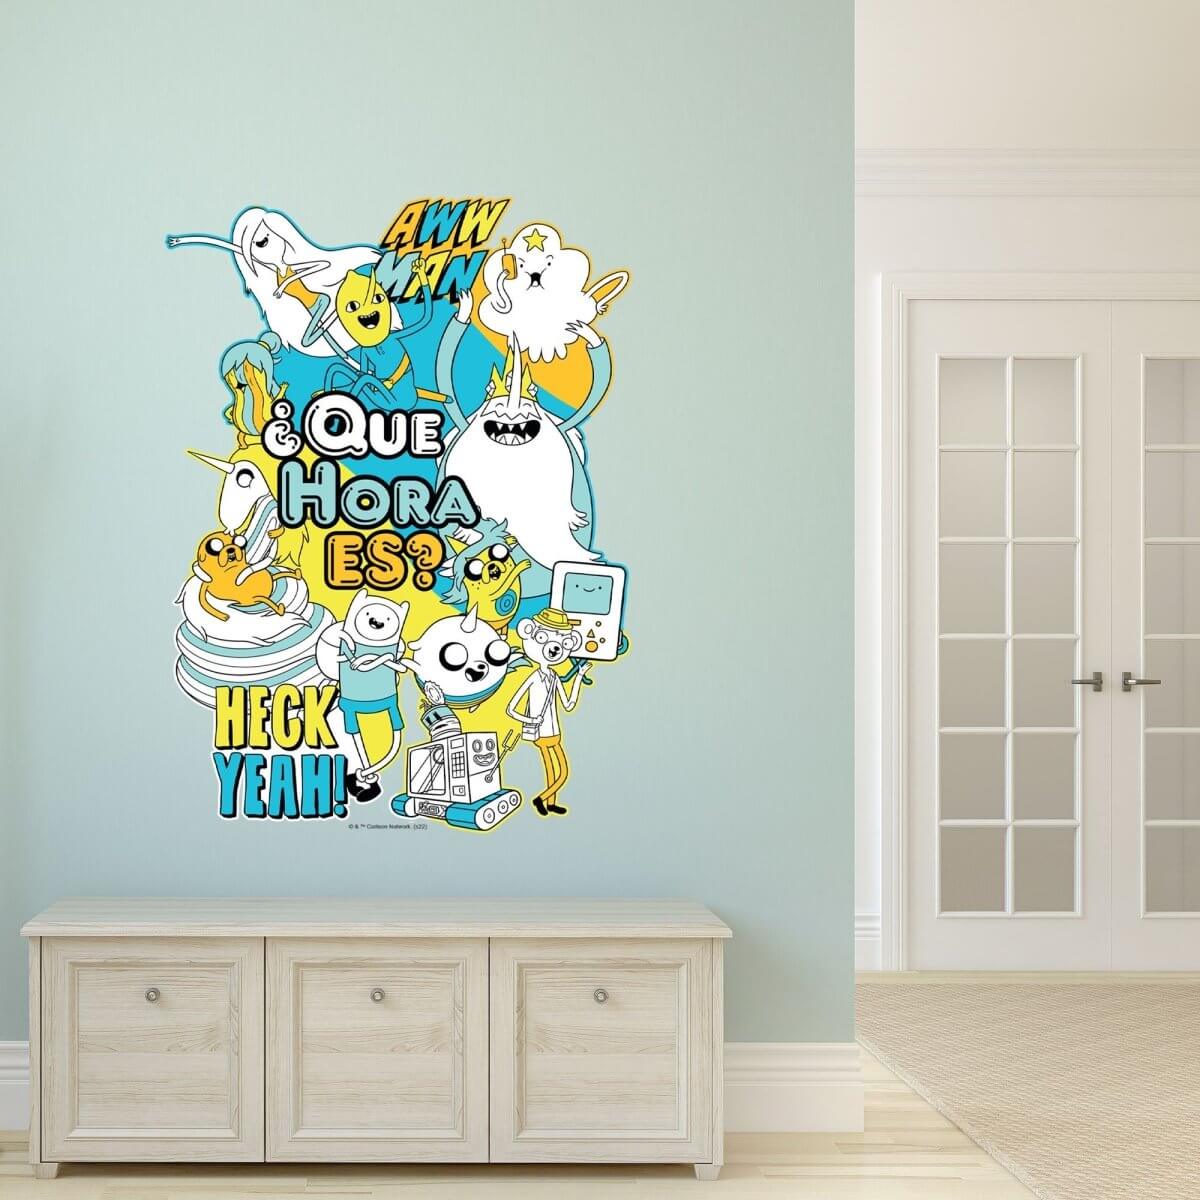 Kismet Decals Adventure Time Que Hora Es? Licensed Wall Sticker - Easy DIY Home & Kids Room Decor Wall Decal Art - Kismet Decals